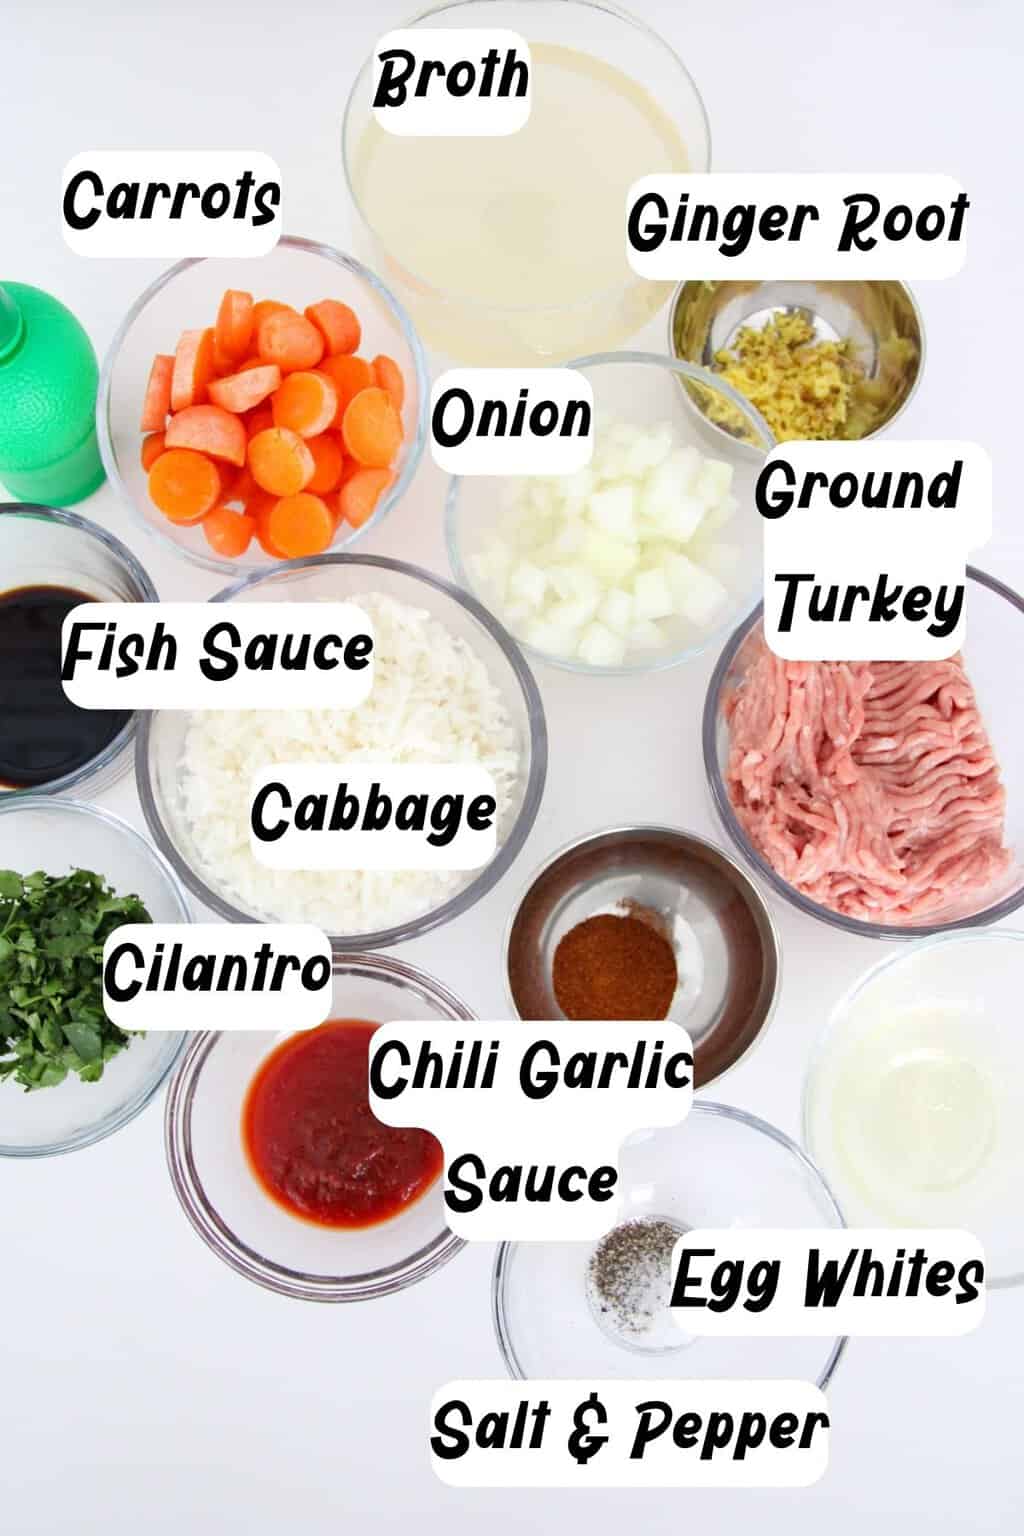 Ingredients: Chili garlic sauce, Ground turkey, Onion, Egg, Ginger root, Cilantro, Black pepper and salt, Chicken broth, Napa cabbage, Carrot, Fish sauce.